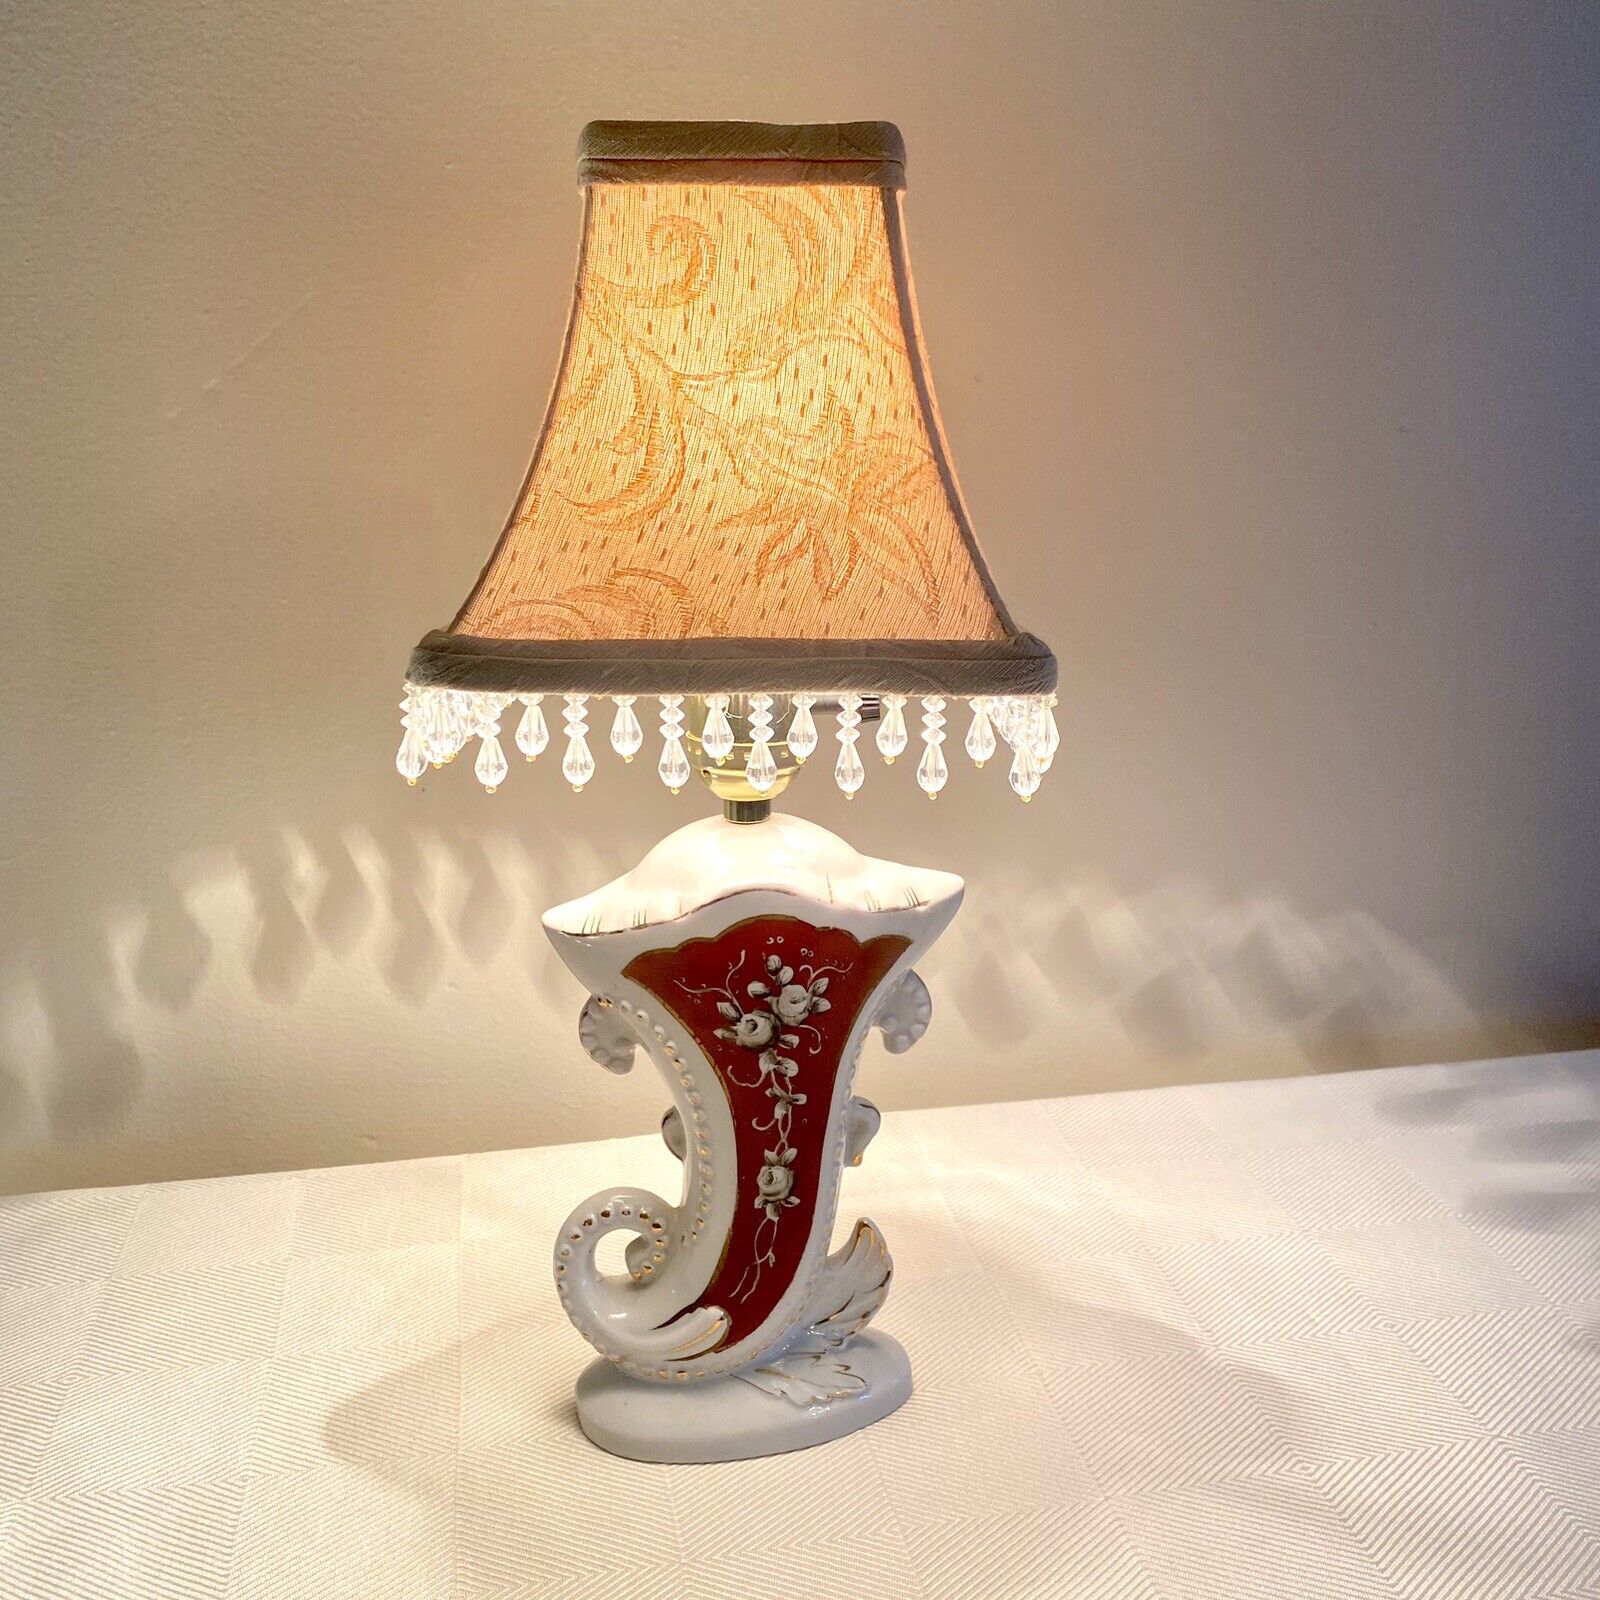 Vtg  Moriyama Japan Small Porcelain Lamp Table Accent Red Gold White #updated#